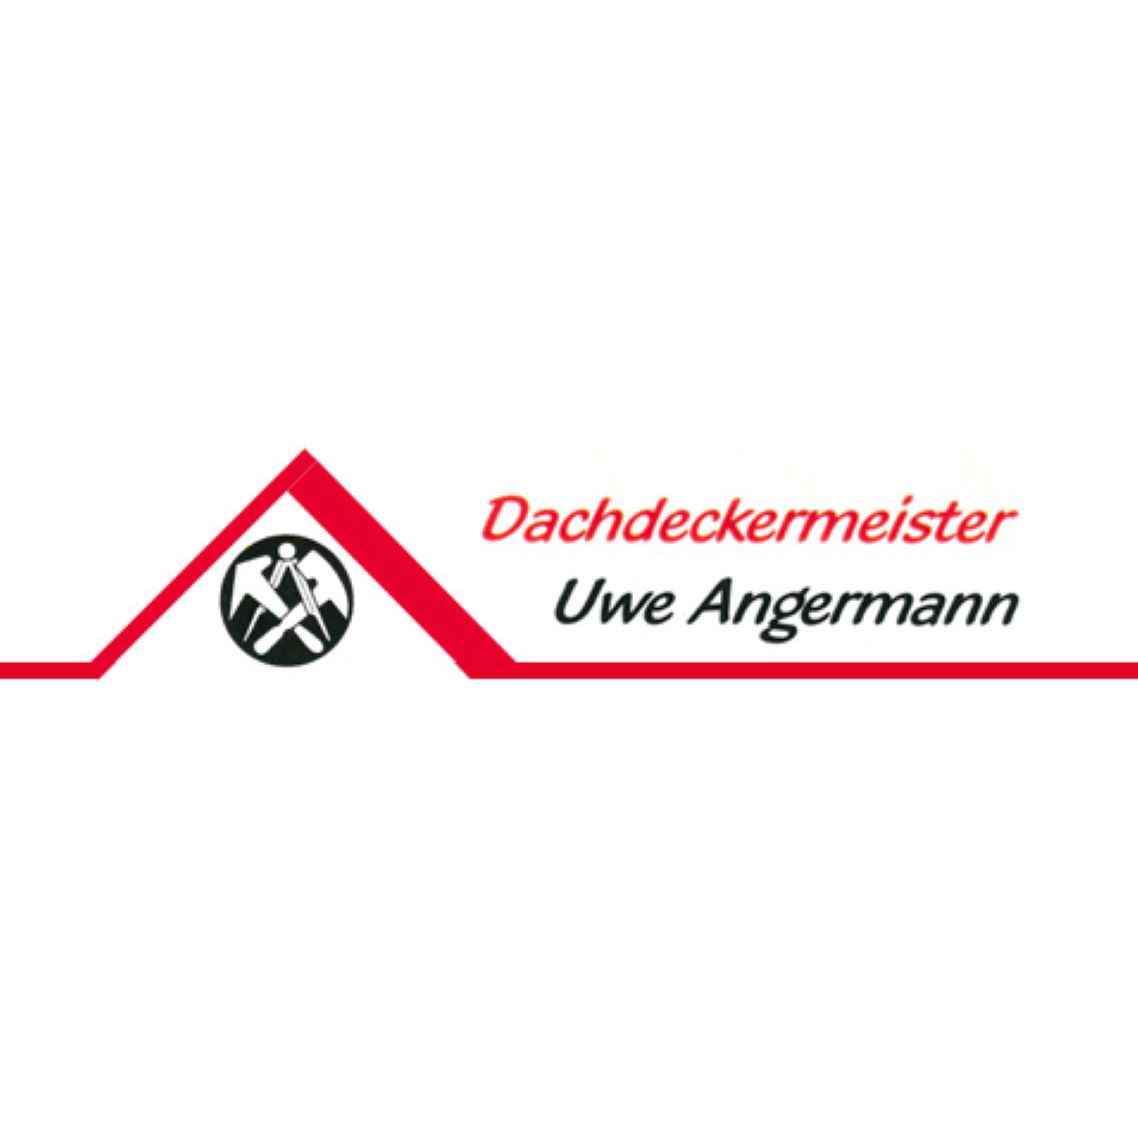 Dachdeckerbetrieb Uwe Angermann in Lauta bei Hoyerswerda - Logo